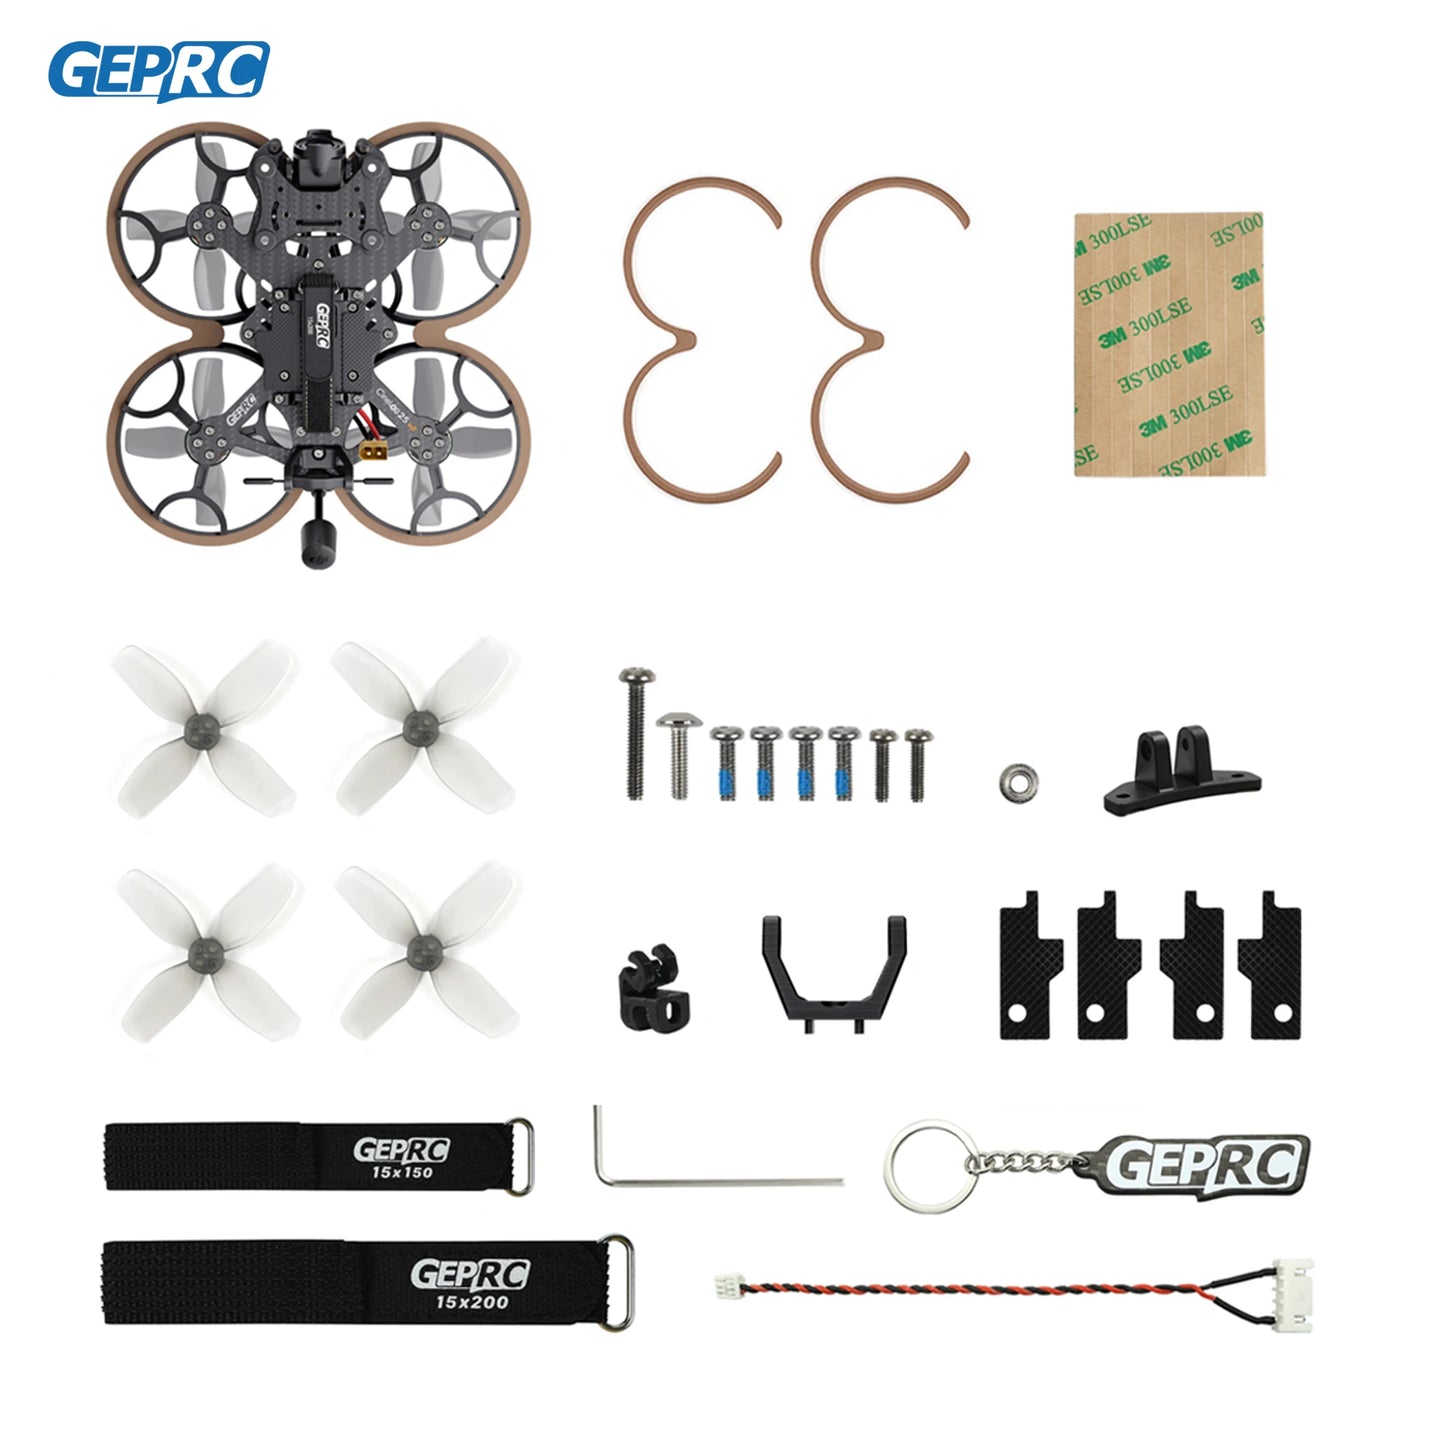 GEPRC Cinelog25 V2 HD Wasp FPV - Runcam Link Peano 5.8G LHCP UFL BNF Video Freestyle RC GPS Mini Quadcopter Drone Racing Kit